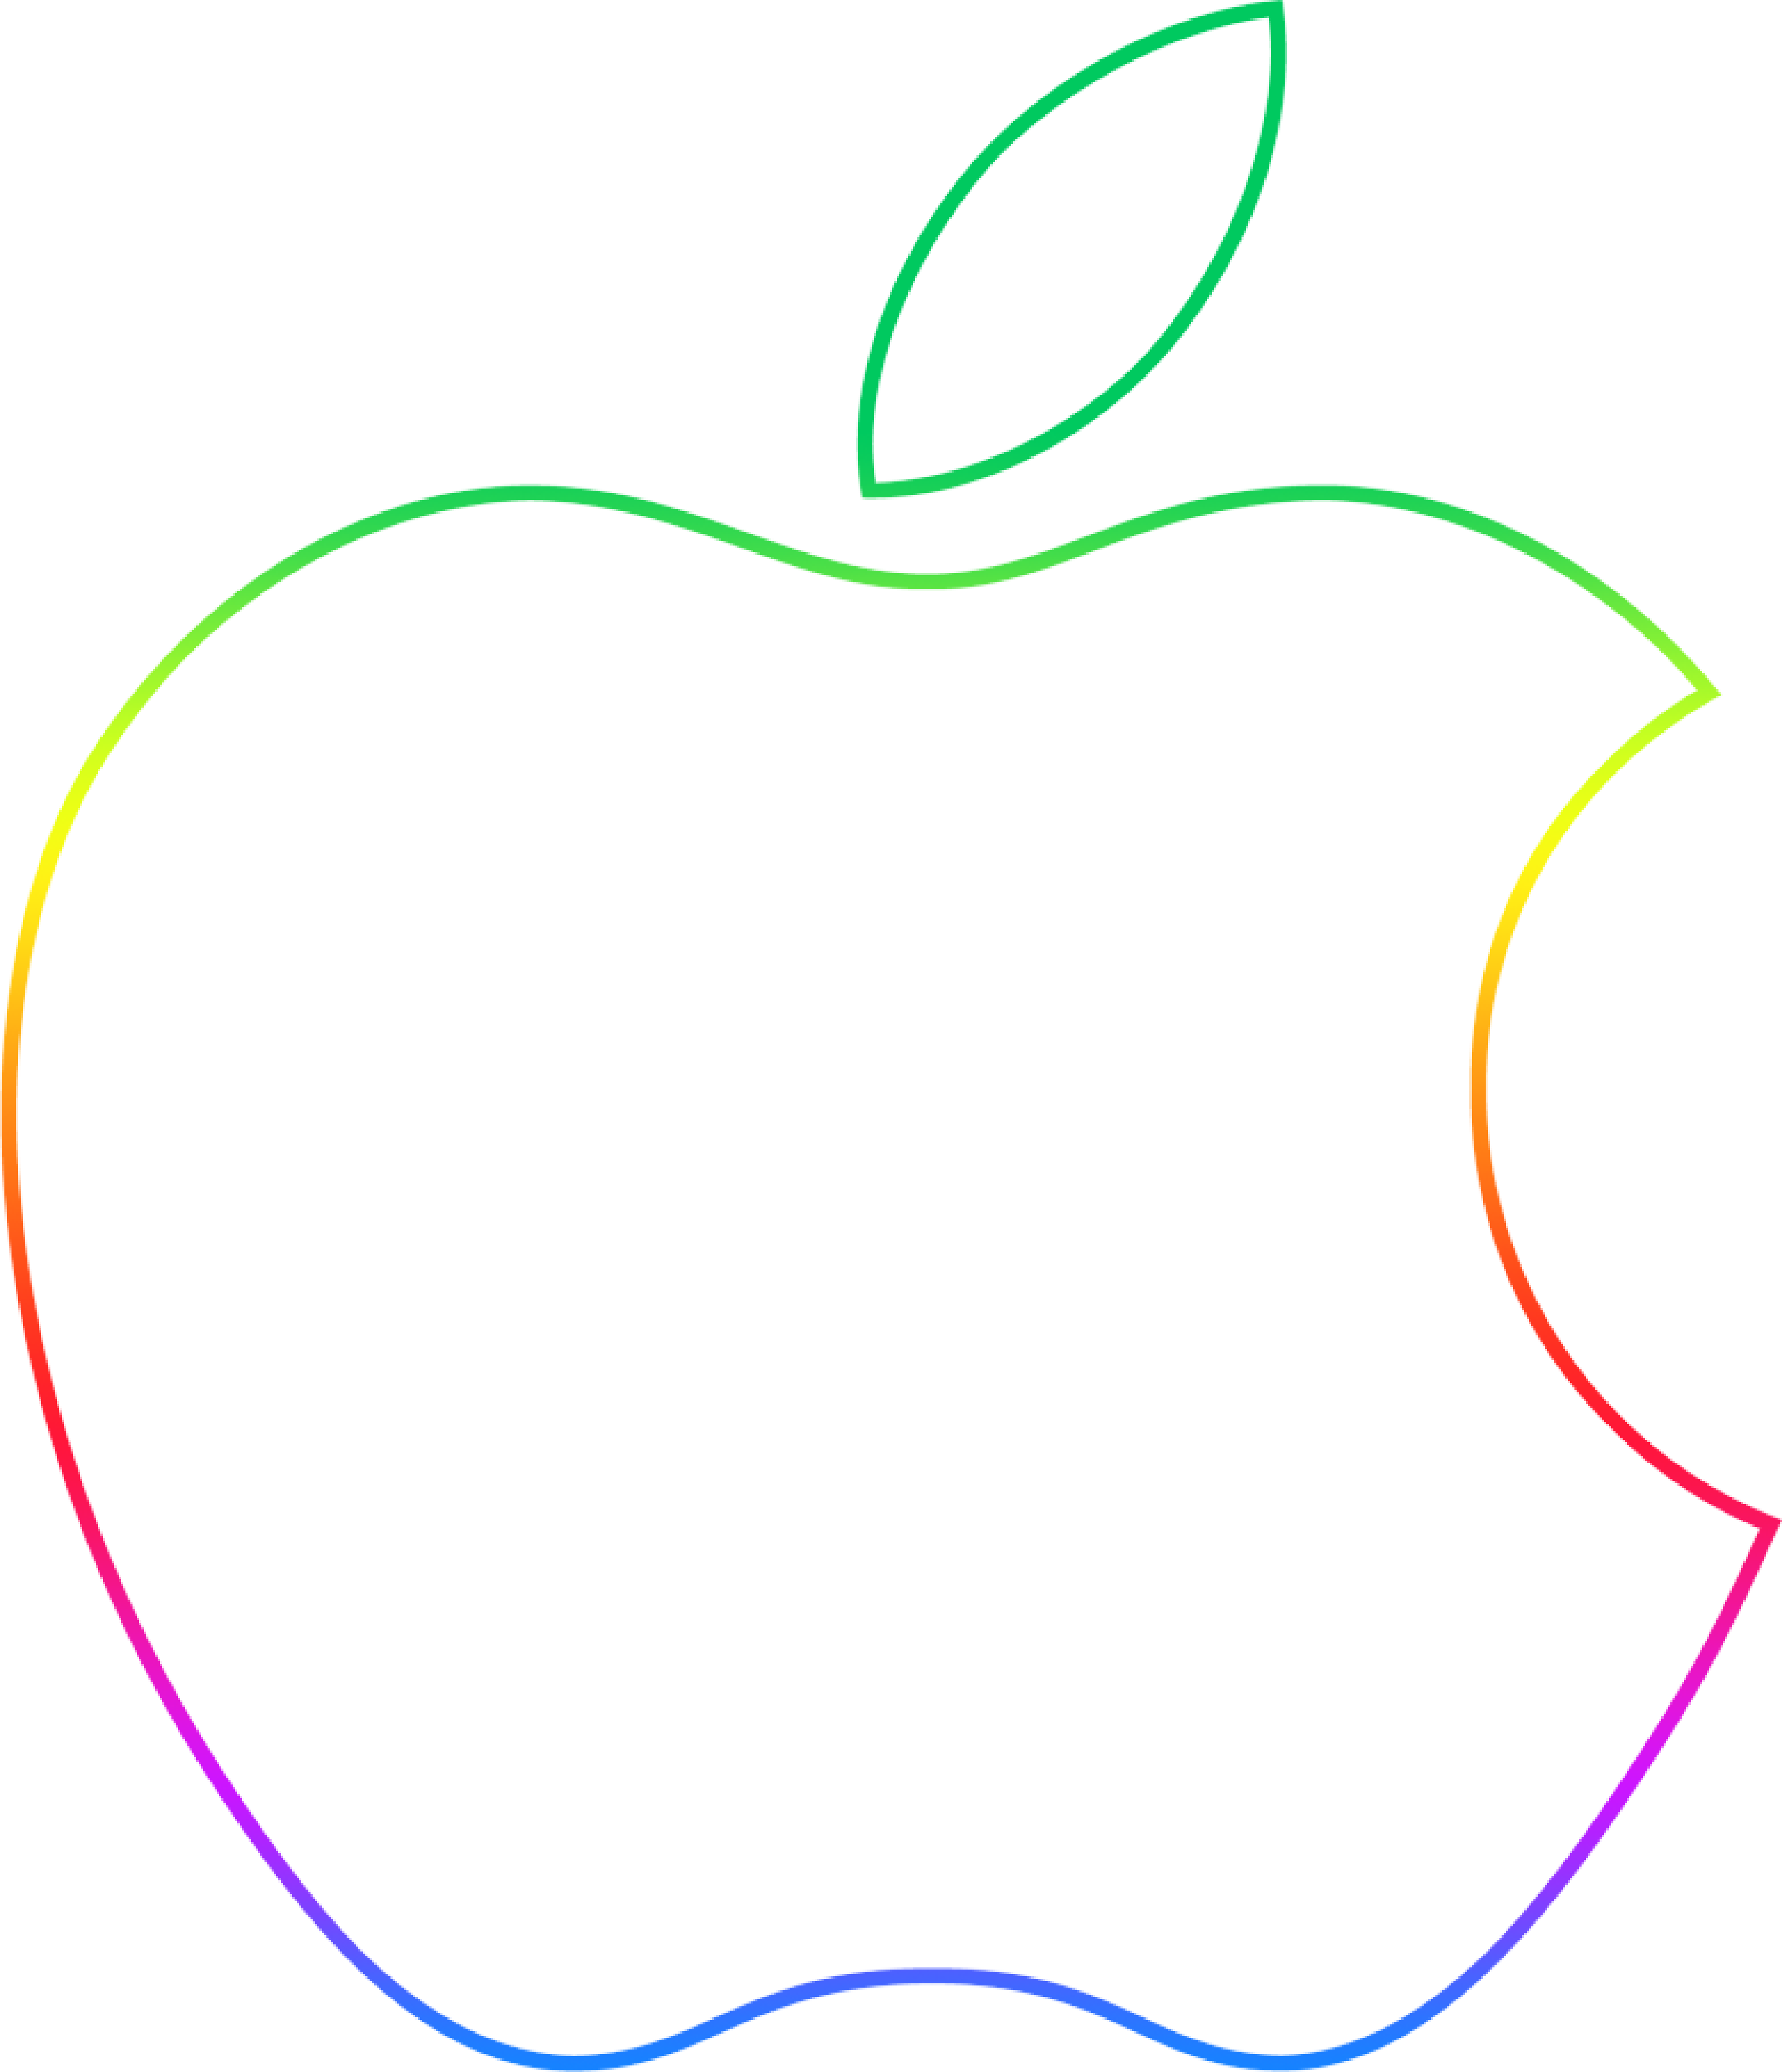 white apple logo transparent background